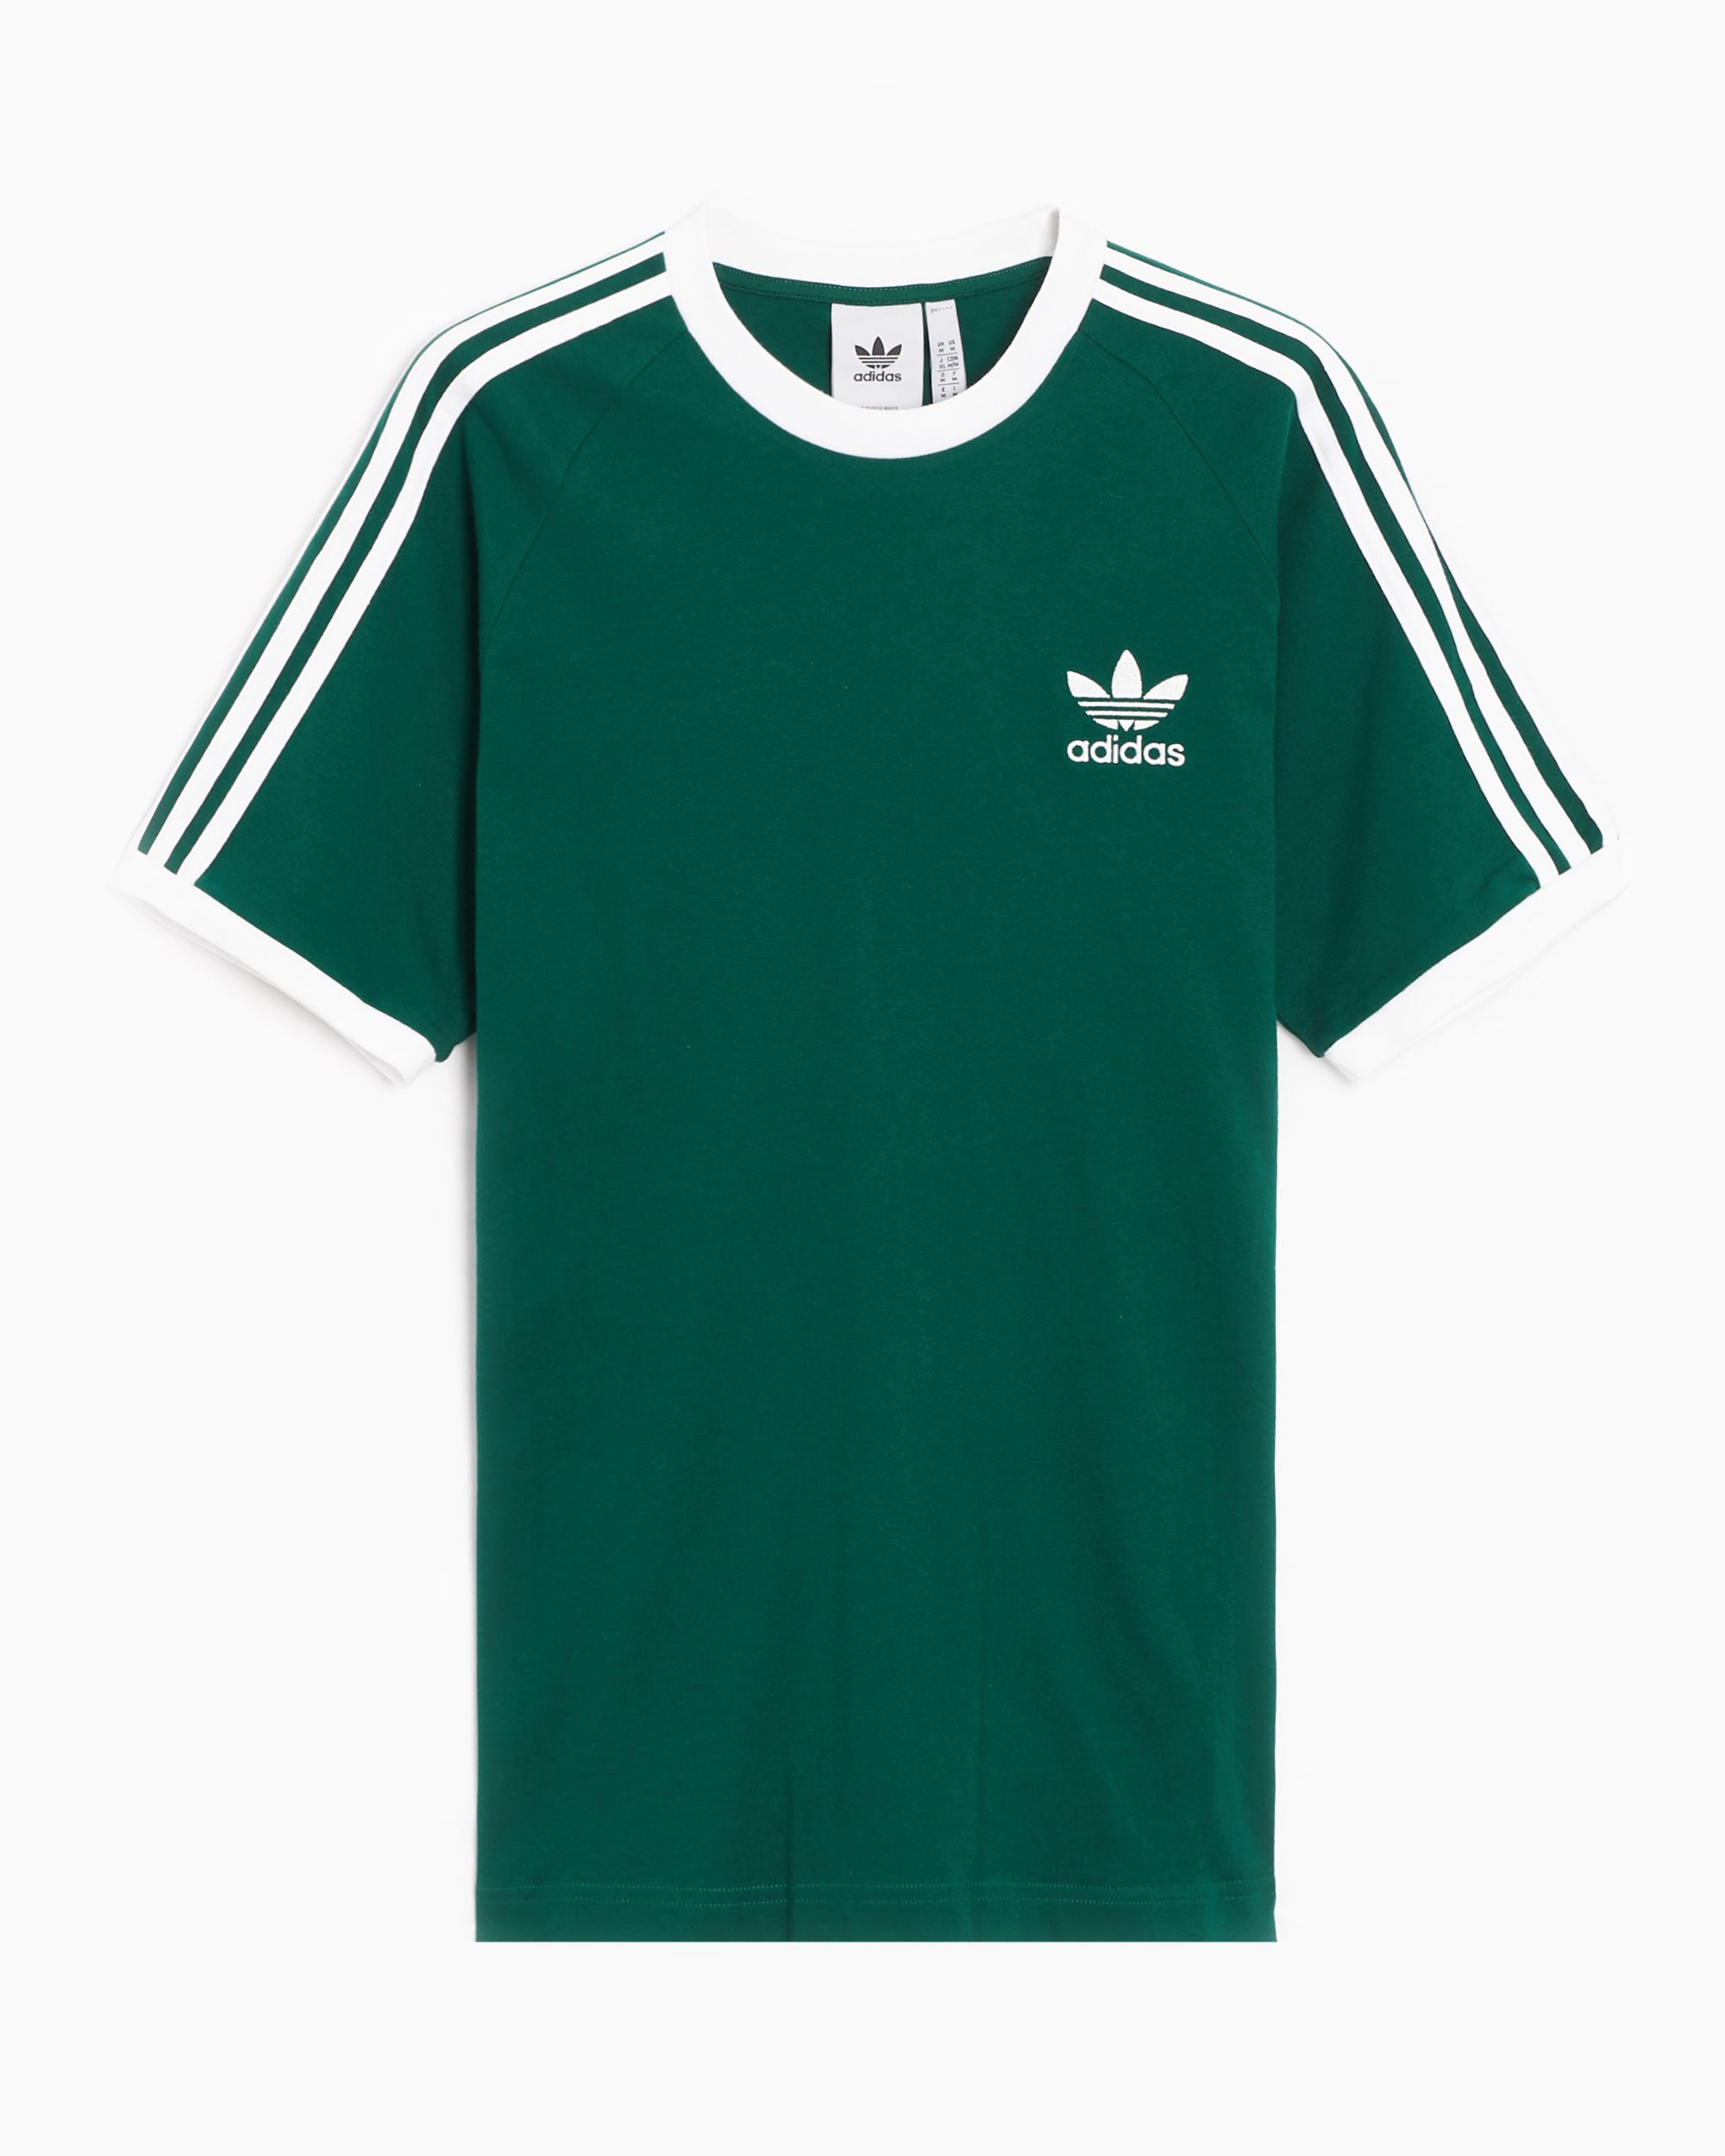 adidas Originals 3 Men's T-Shirt Green Buy Online at